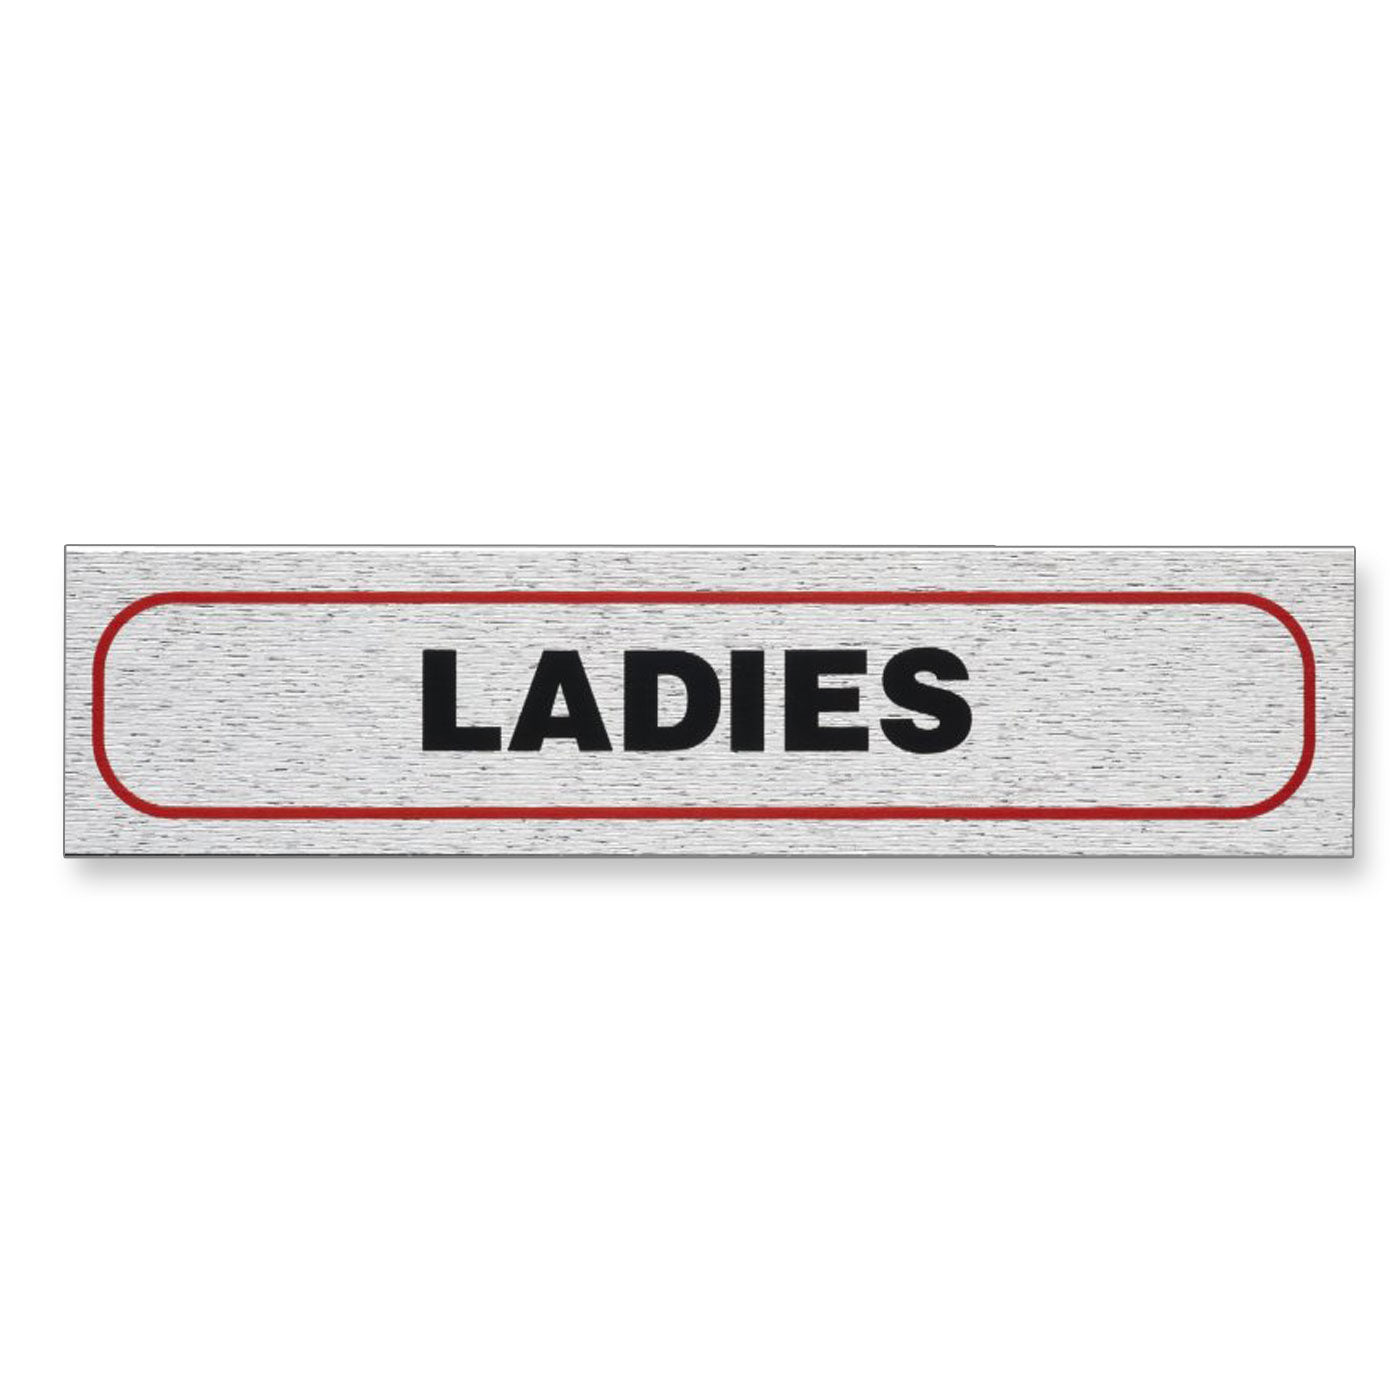 Information Sign "LADIES" 17 x 4 cm [Self-Adhesive]